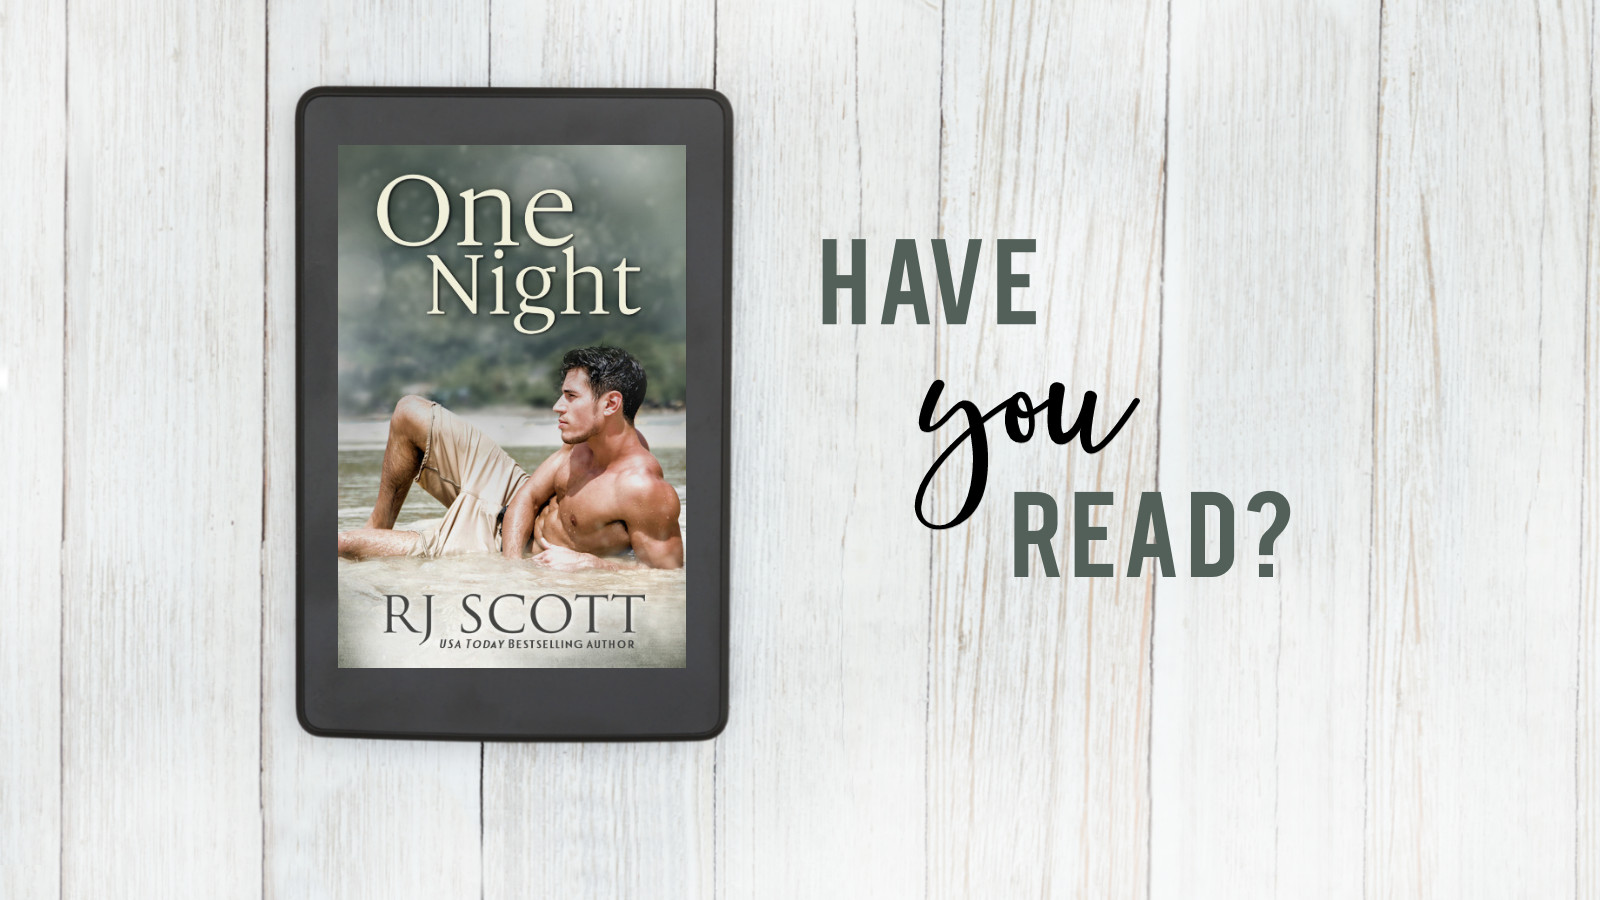 Have you read One Night MMRomance RJ Scott